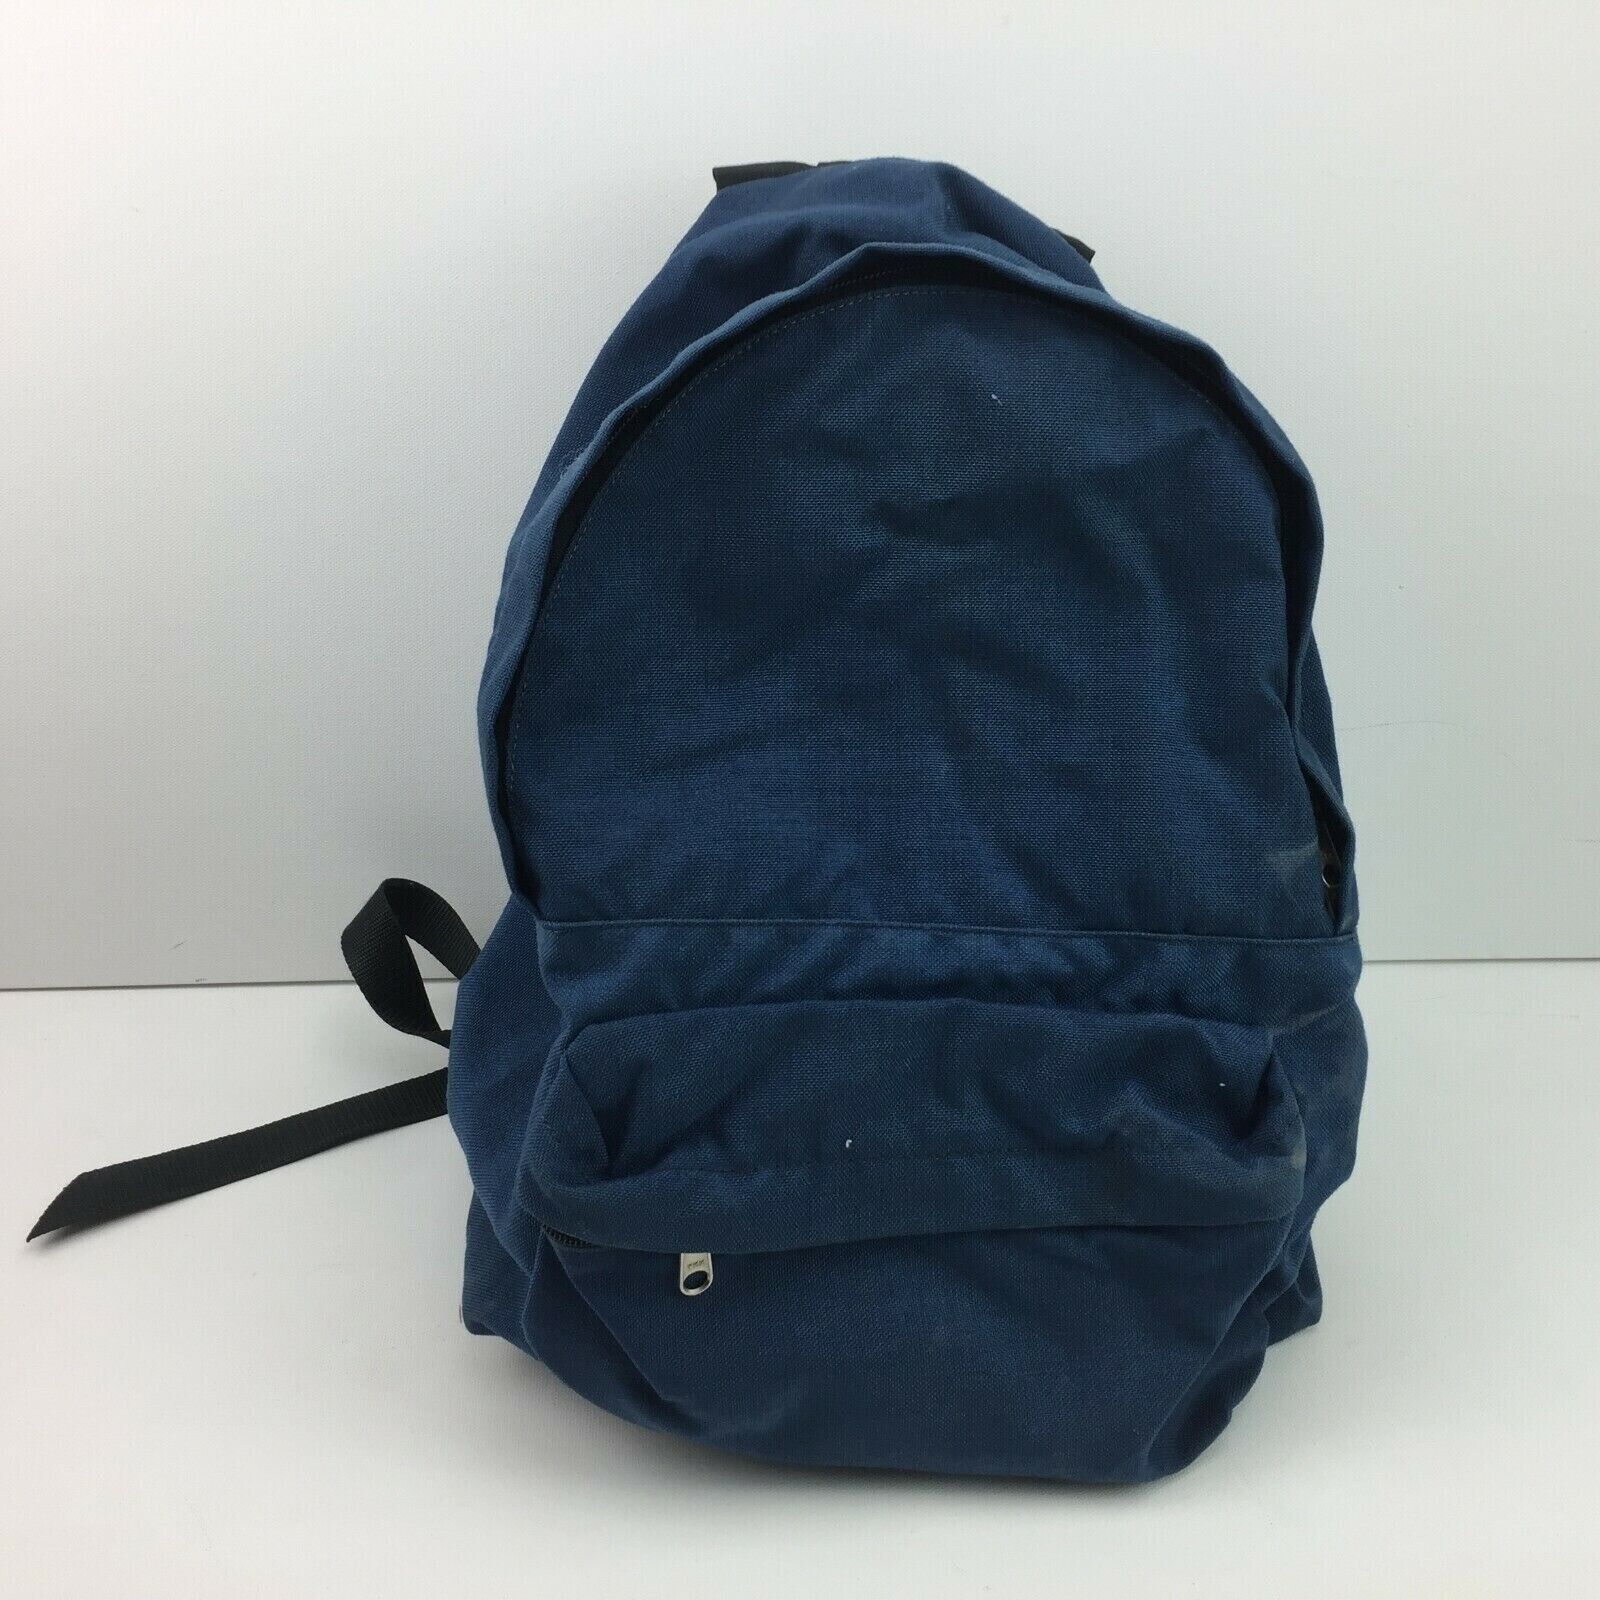 Vintage 80s Navy Blue Backpack Book Bag School 16" Retro Style Travel Boys Girls - $49.99